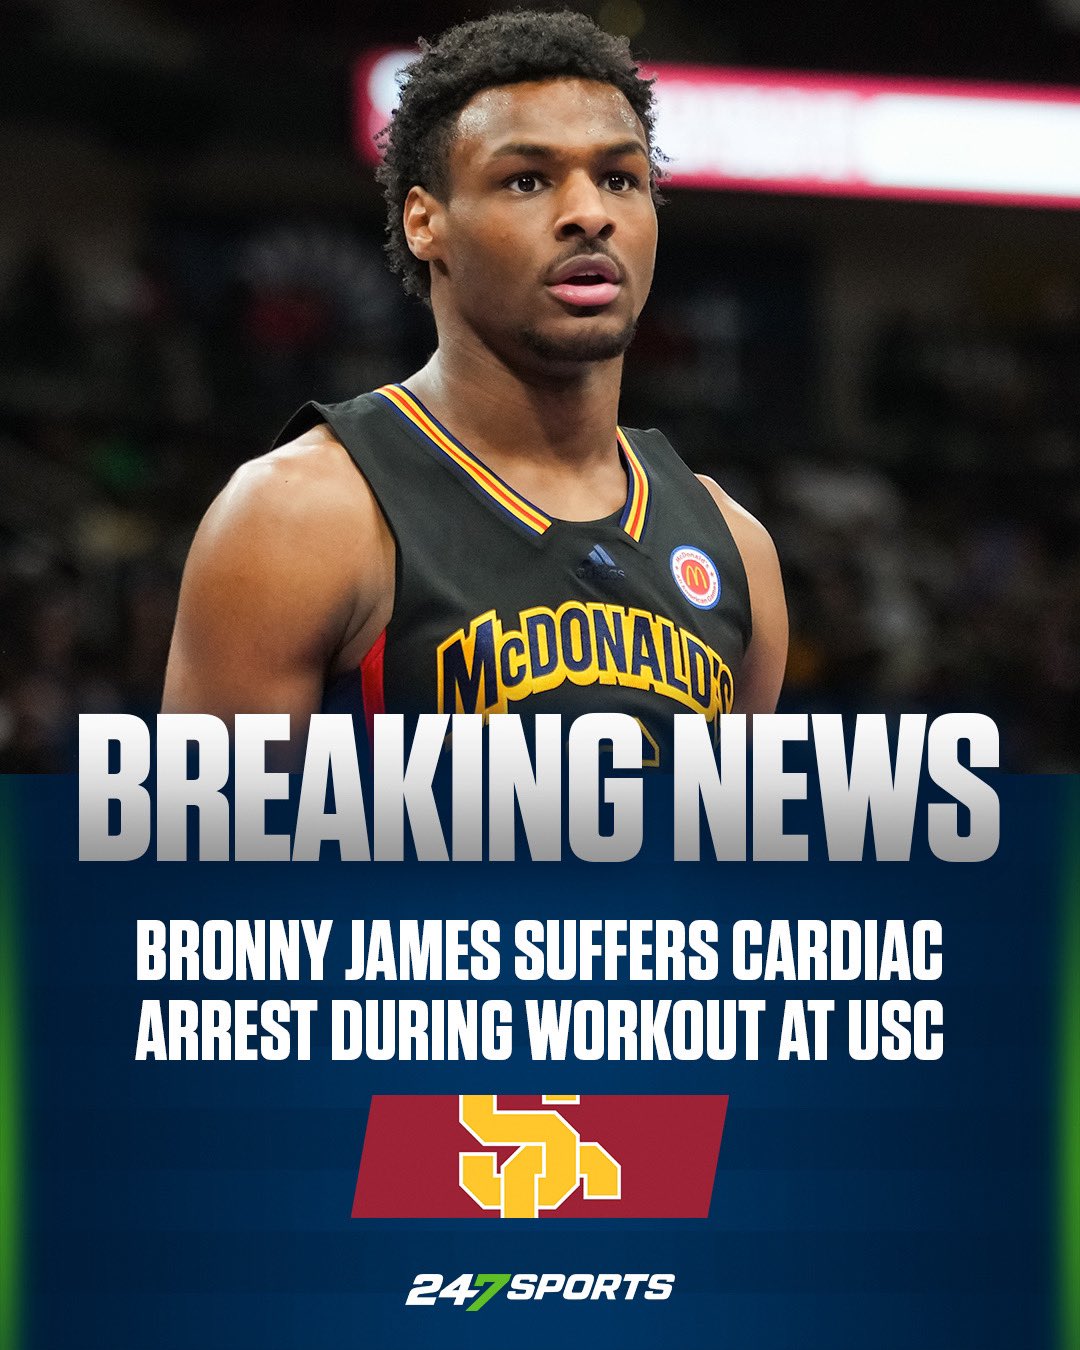 Bronny James, LeBron James' son, suffers cardiac arrest